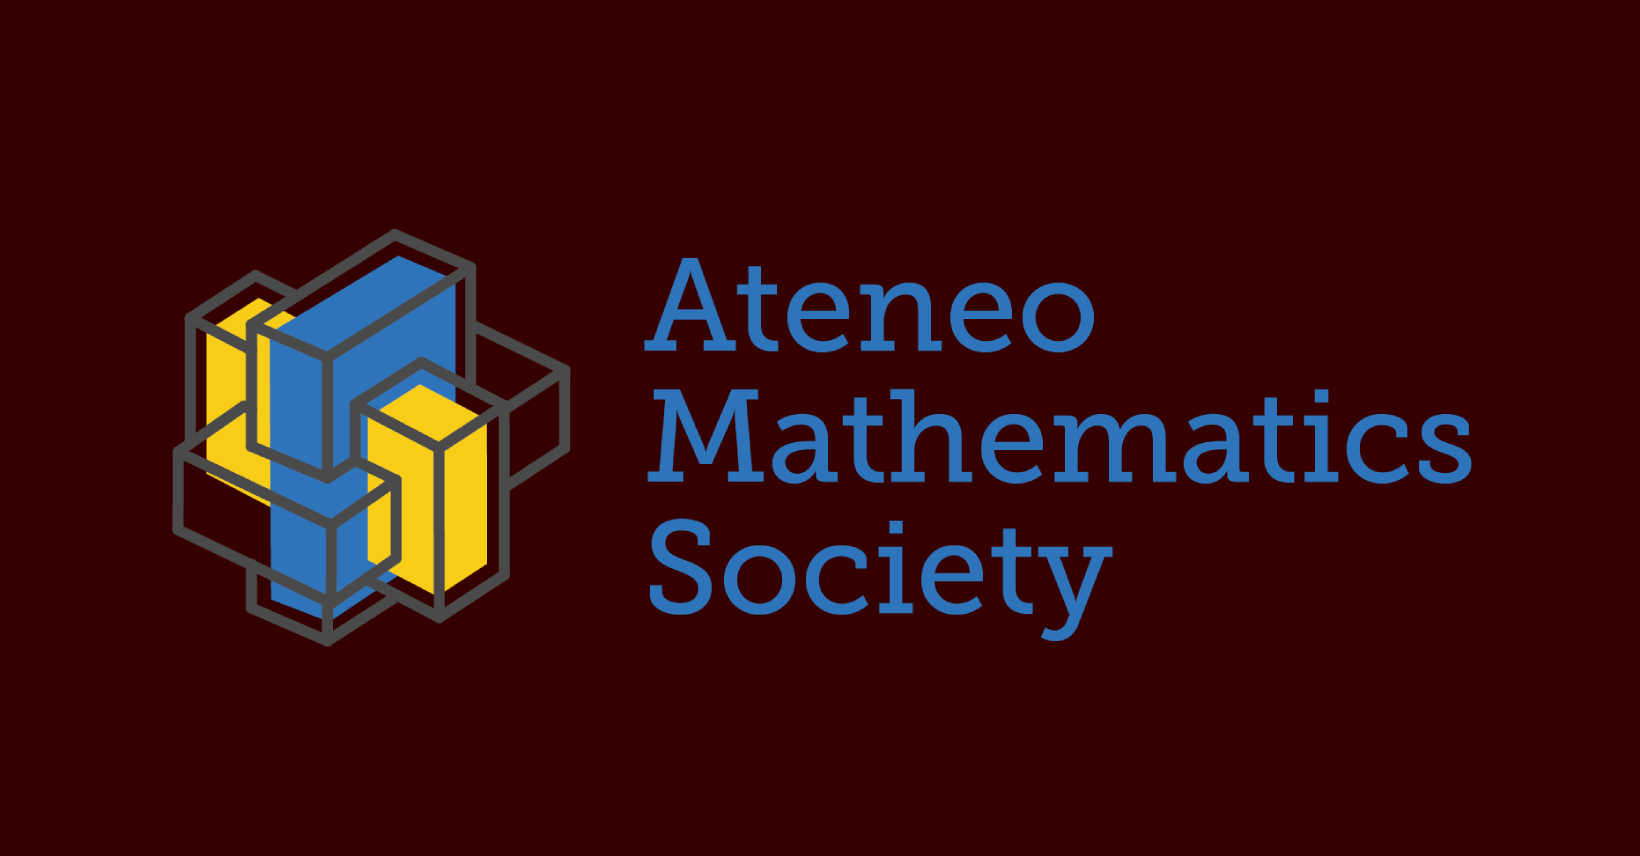 Ateneo Mathematics Society Mathventure